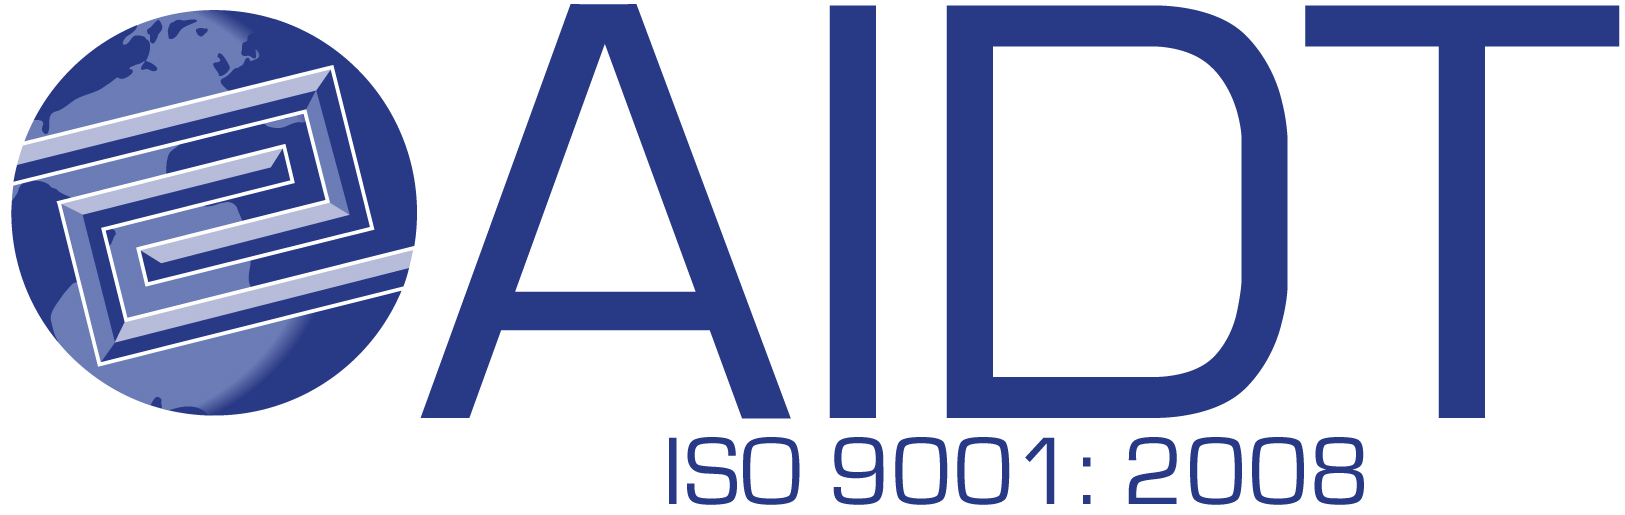 https://marshallteam.org/wp-content/uploads/2022/05/AIDT-logo.png